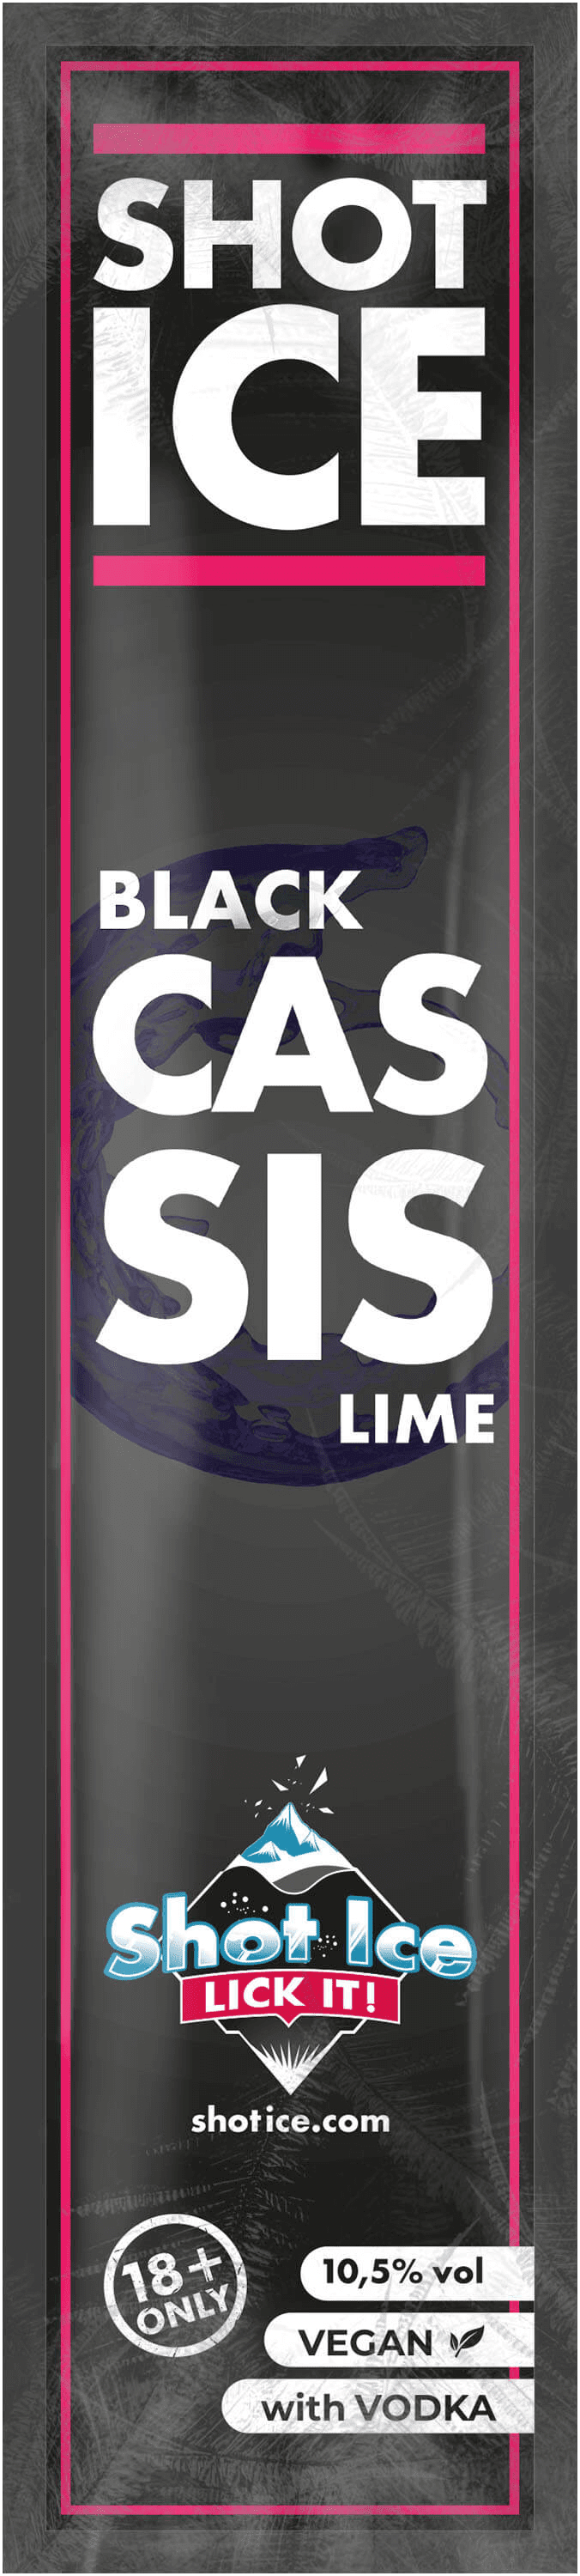 Black Cassis Lime